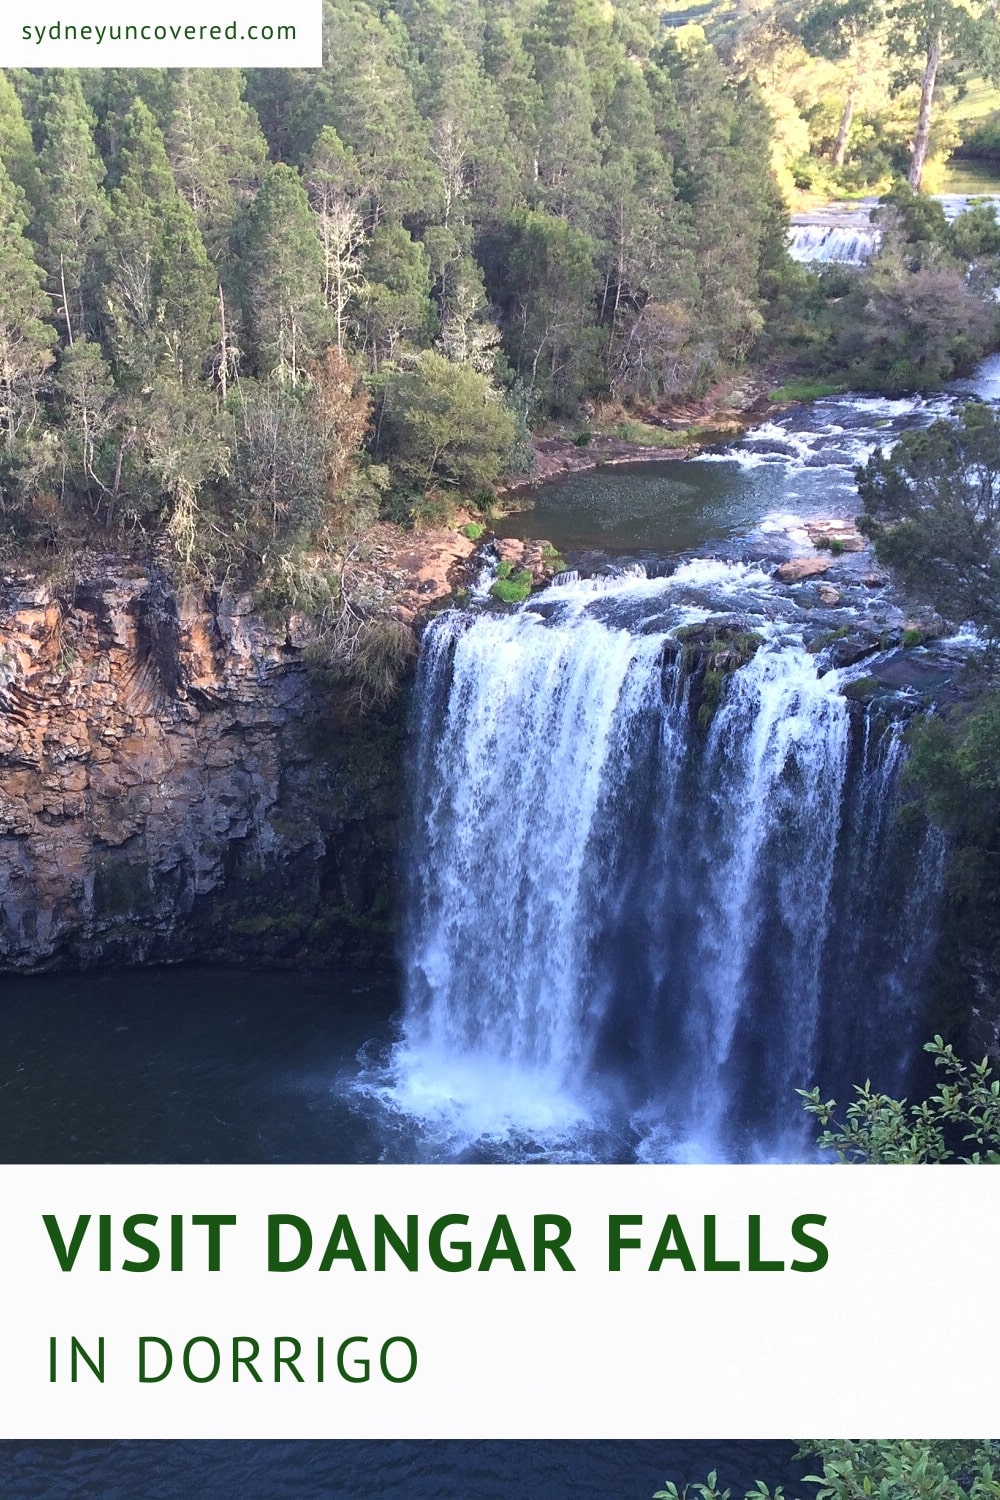 Dangar Falls in Dorrigo NSW